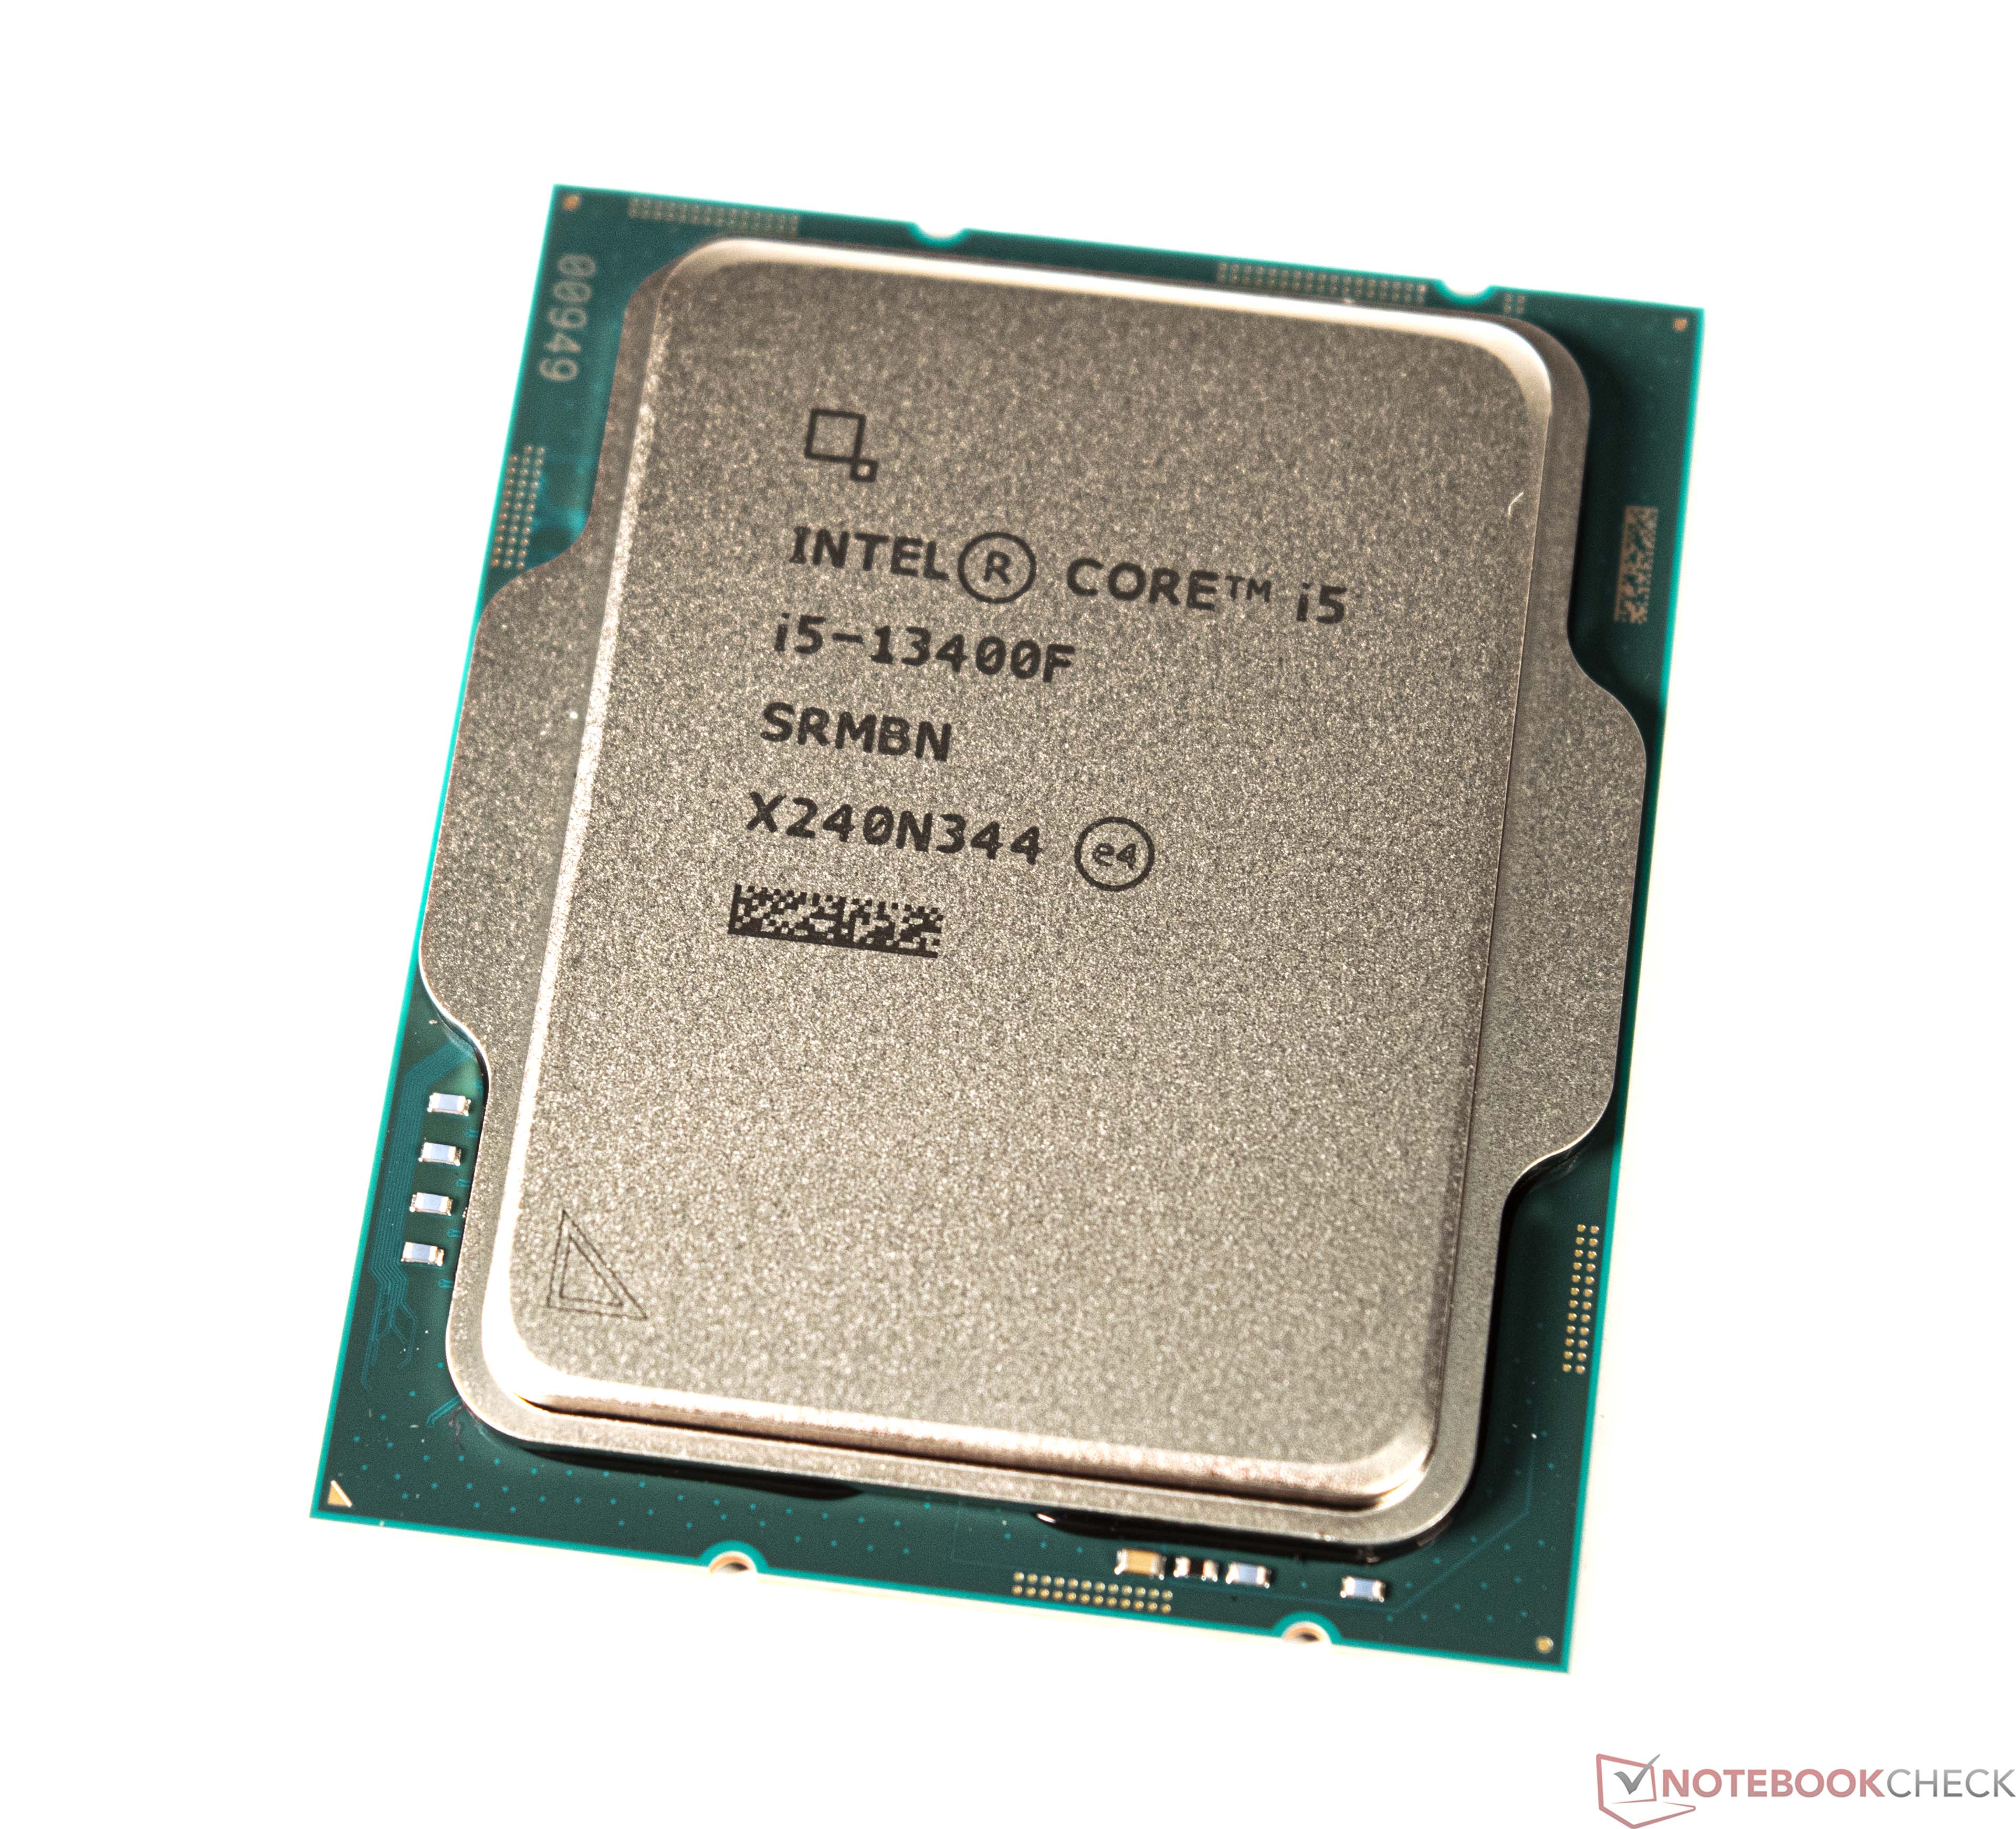 Core i5-13400 Exhibits Core i5-12600K-Like Performance For Around